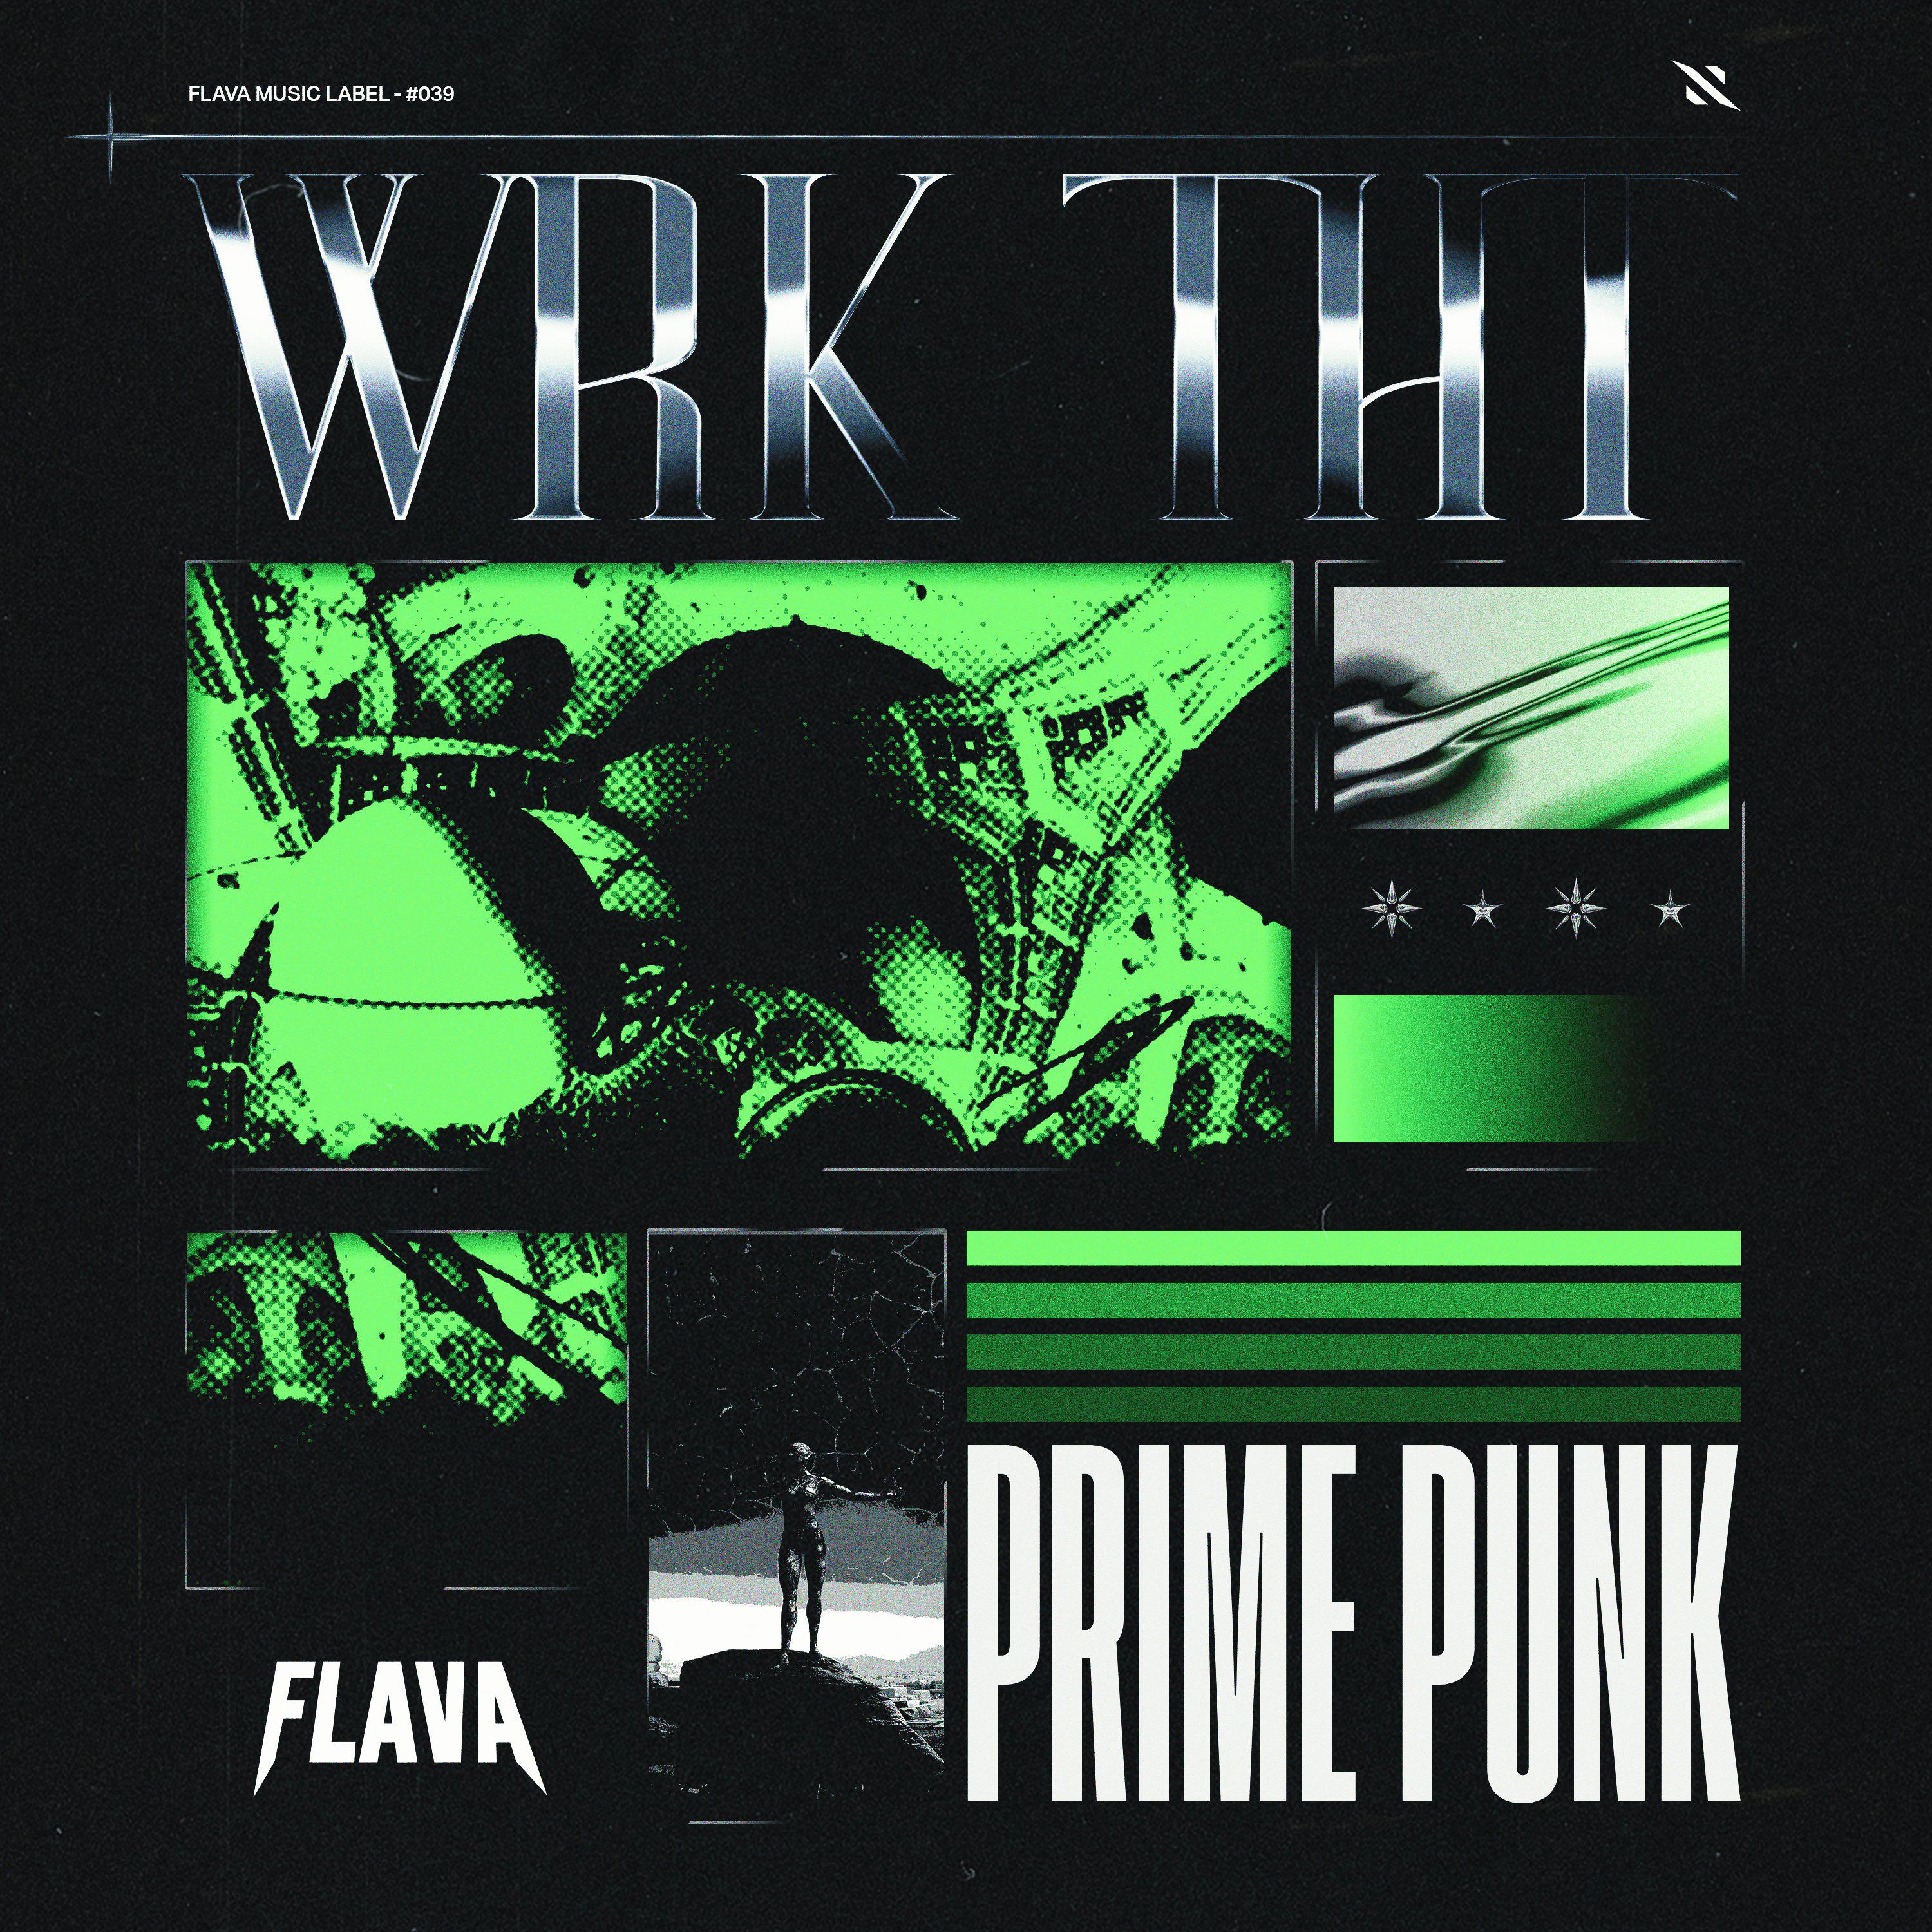 Prime Punk - Wrk Tht (Extended Mix)